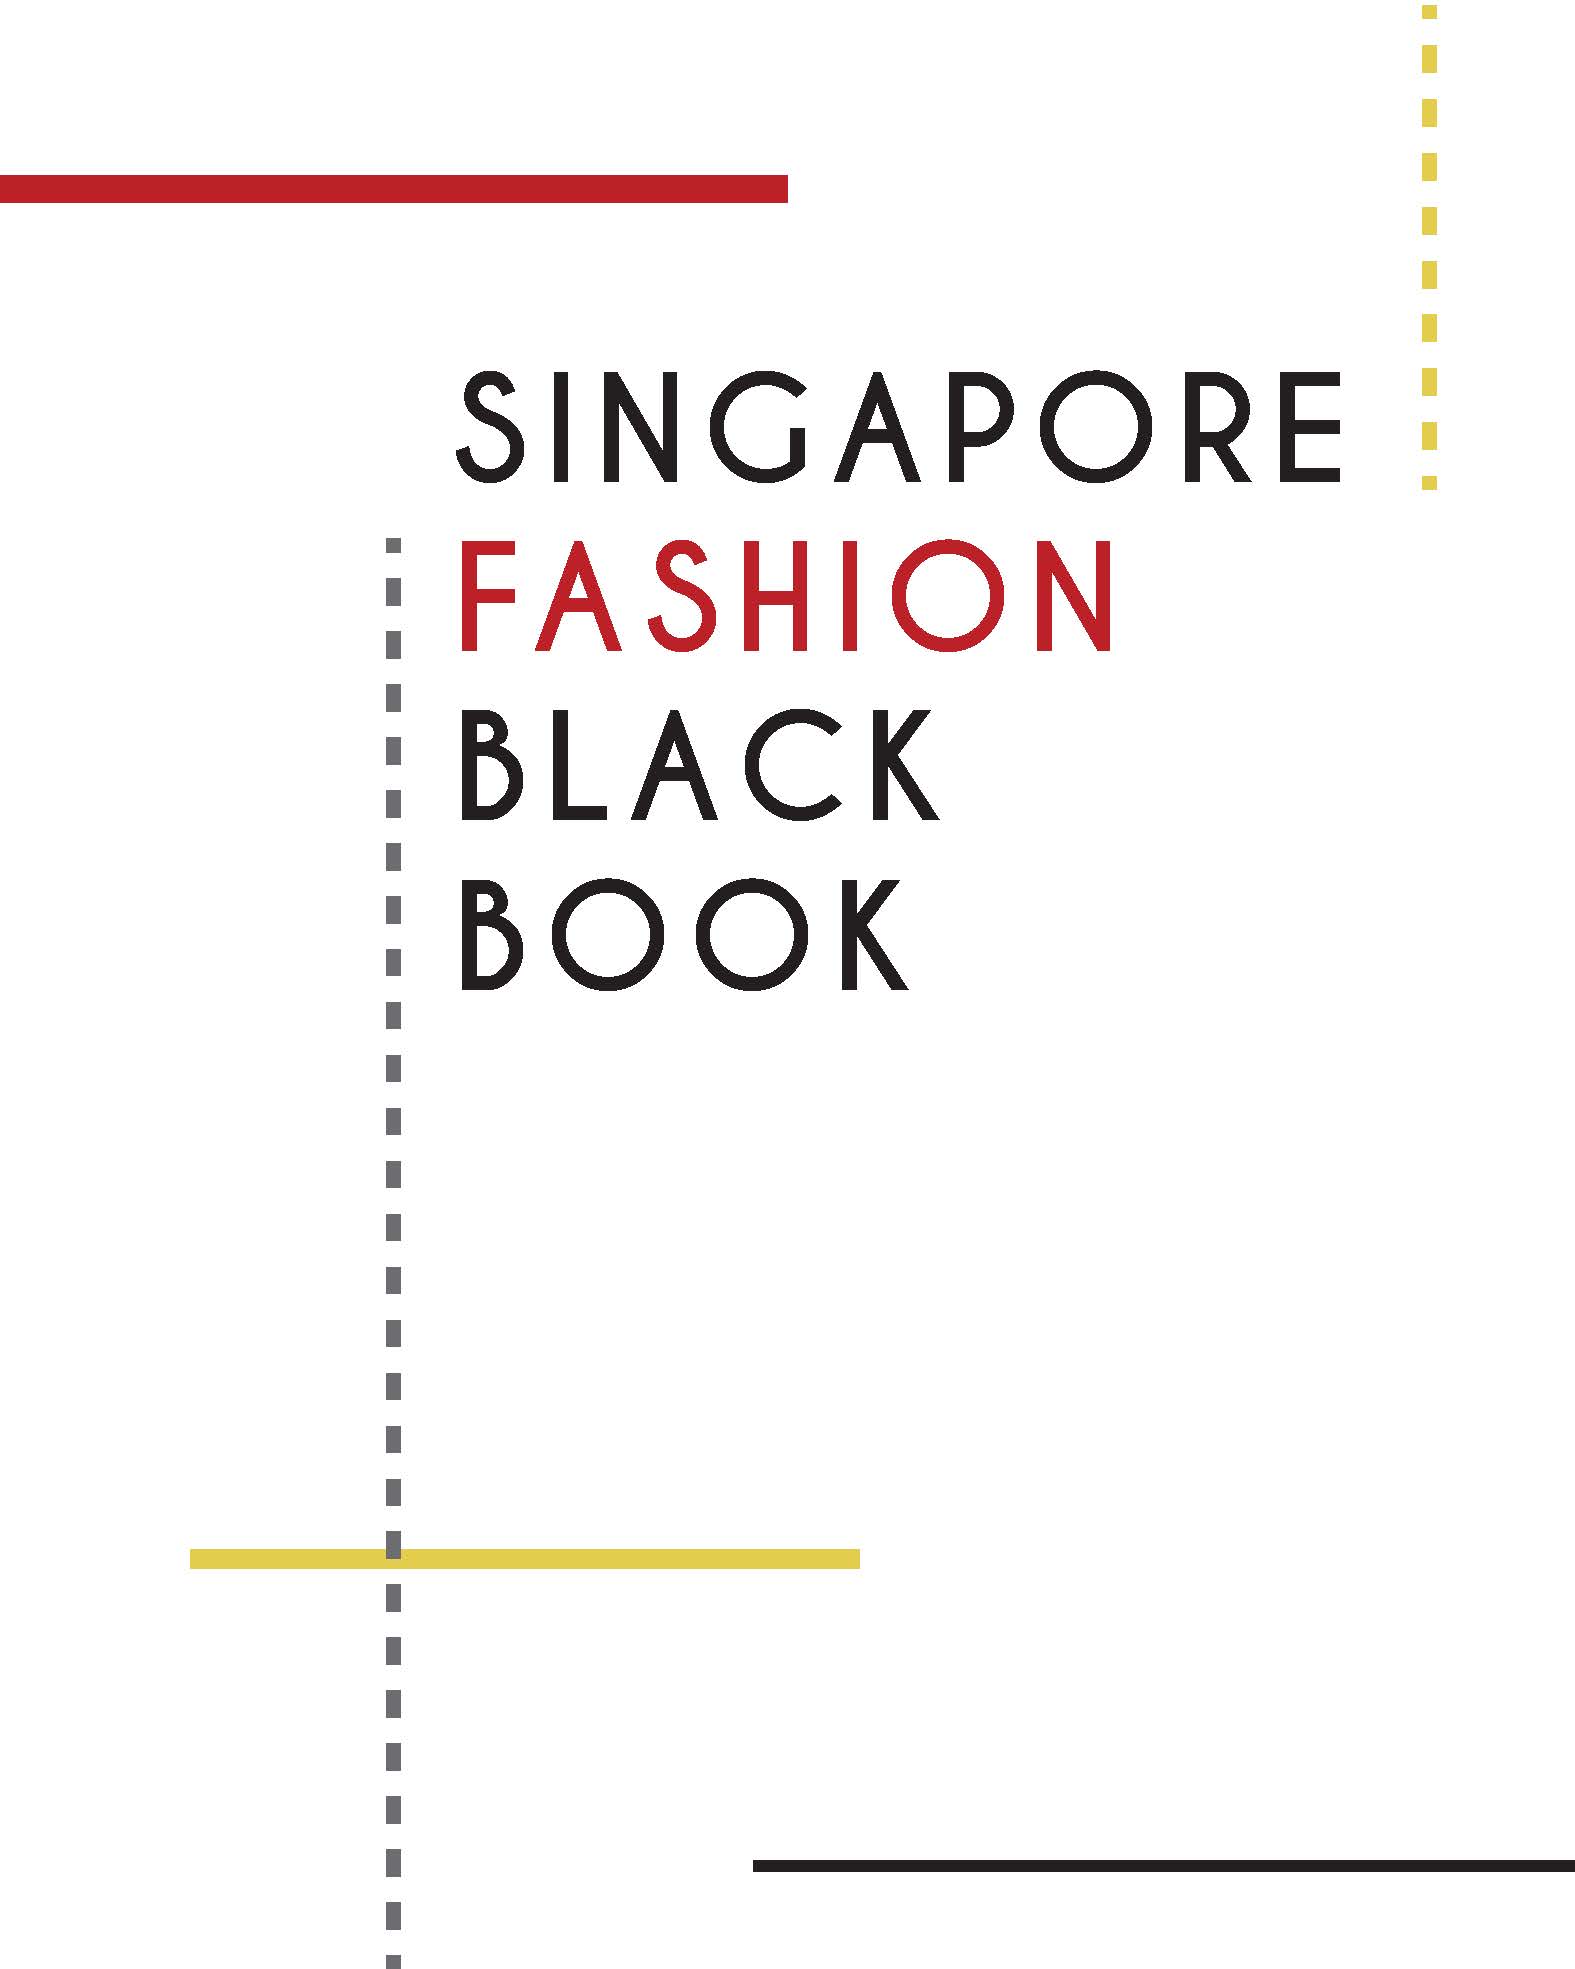 Singapore Fashion Black Book